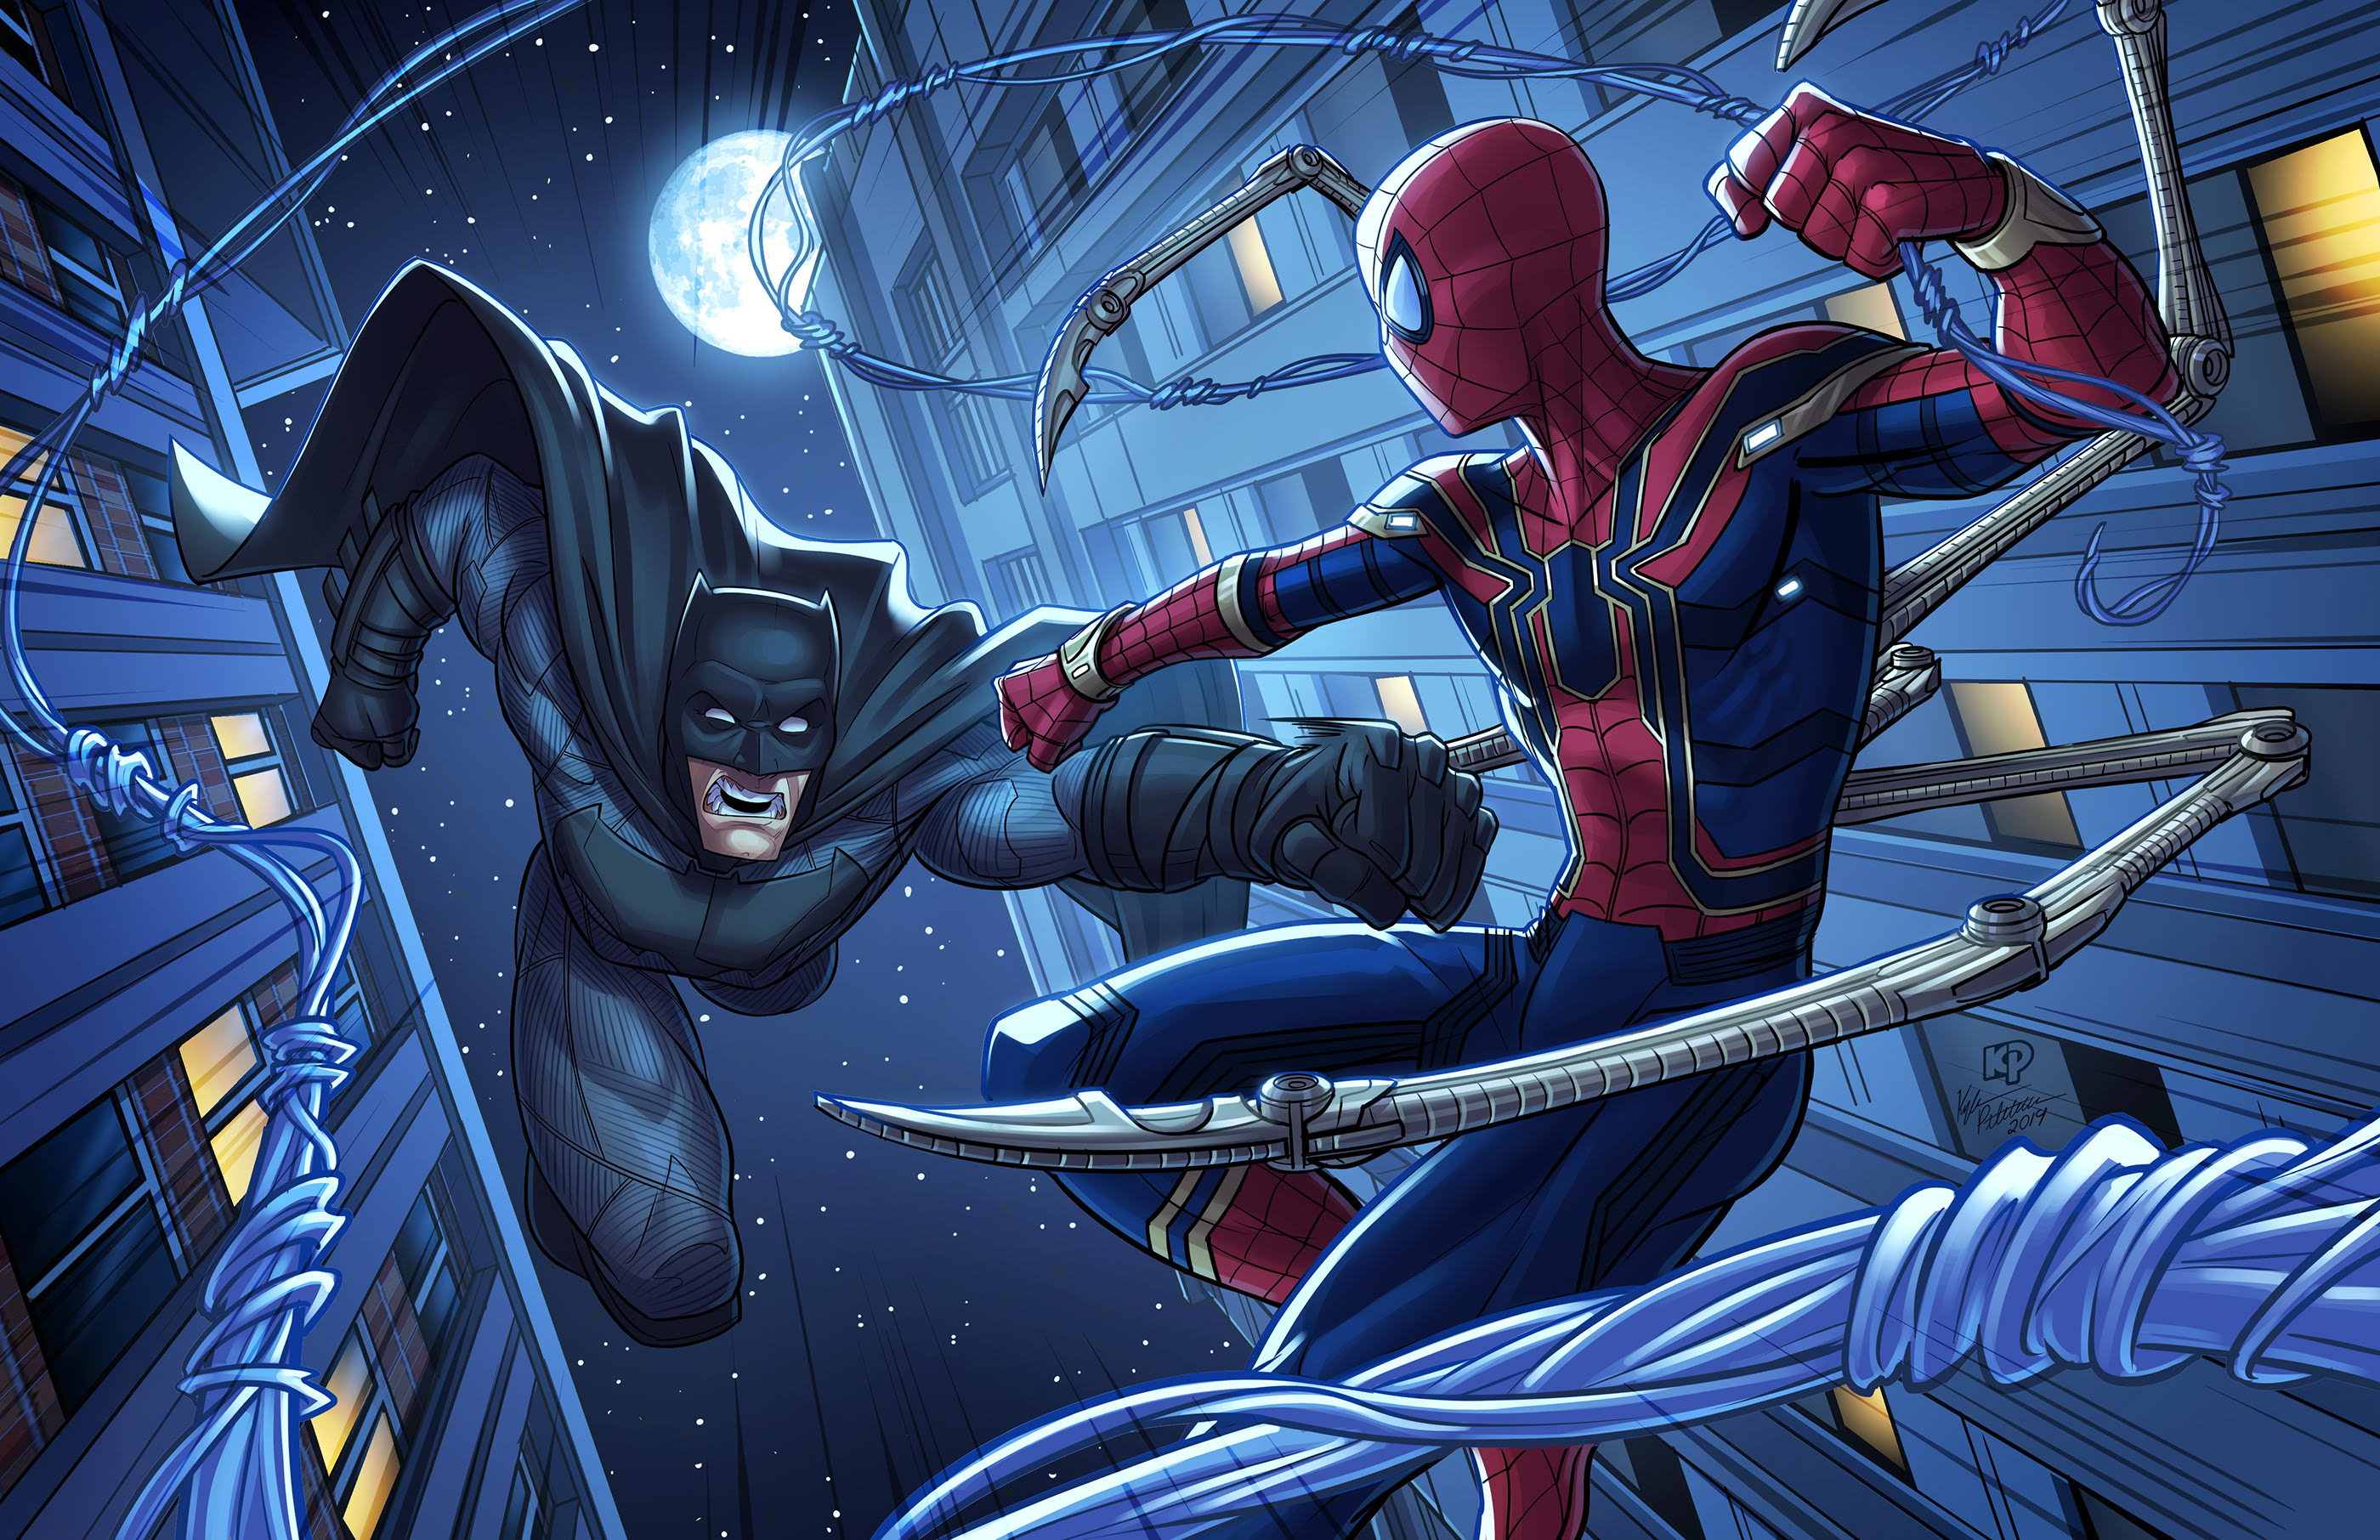 Batman vs spiderman